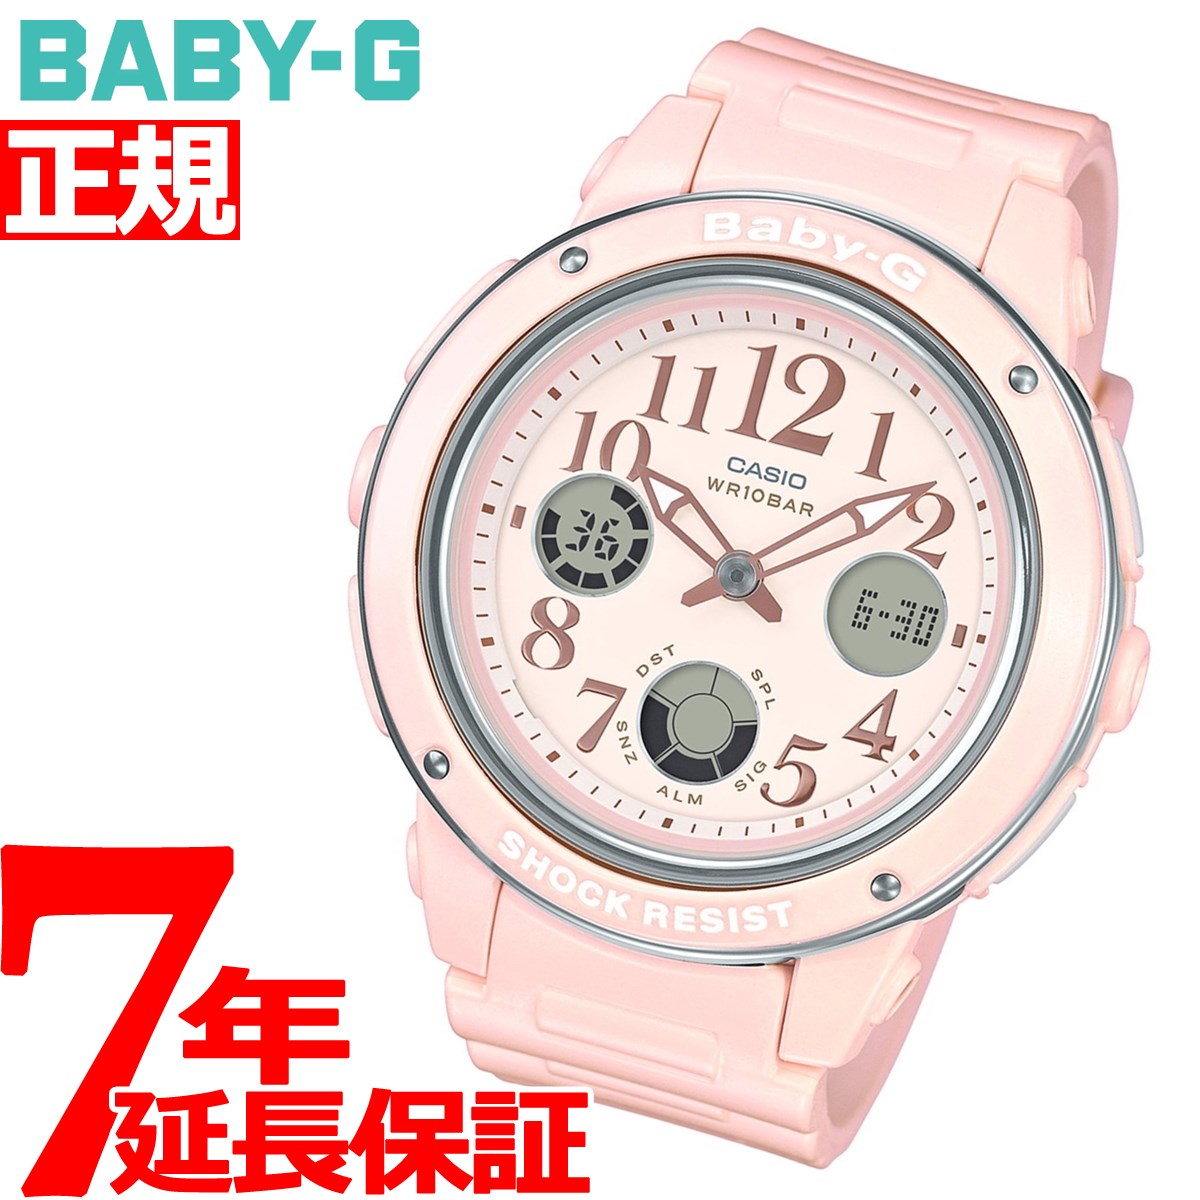 CASIO BABY-G カシオ ベビーG 腕時計 レディース パステル・ピンク アナデジ BGA-150EF-4BJF